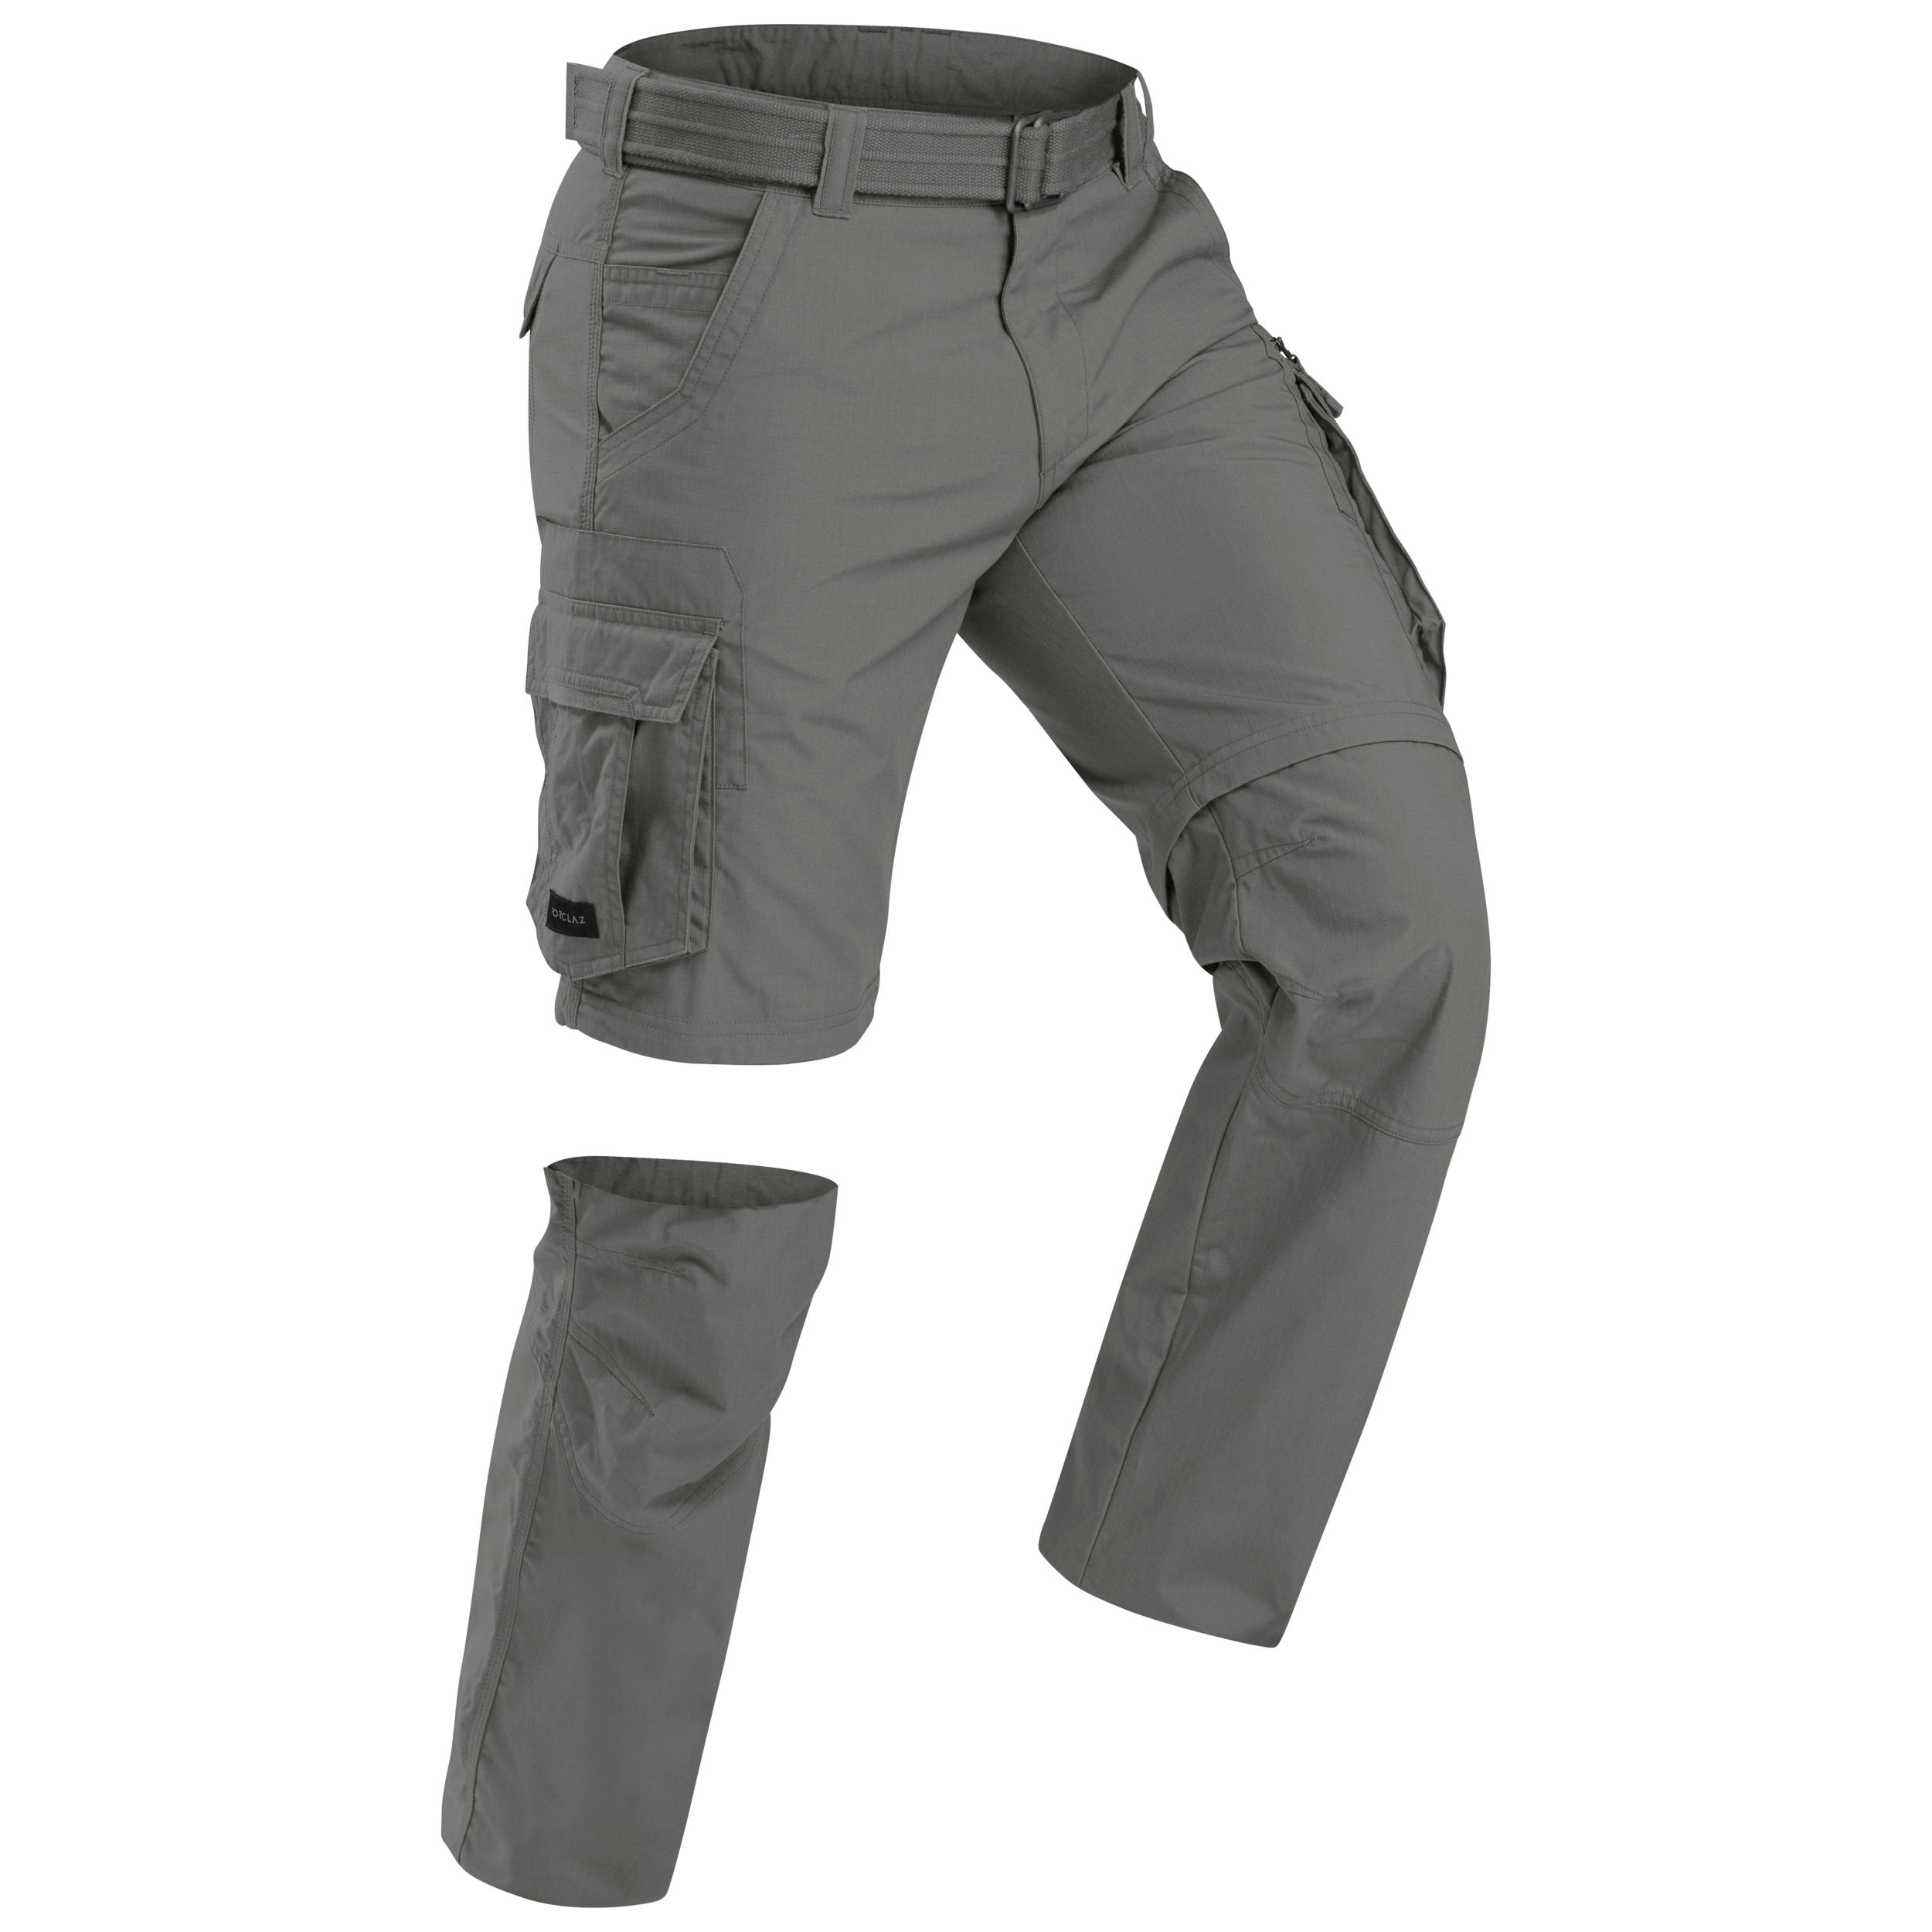 Buy Men'S Recycled Polyester Slim-Fit Gym Track Pants - Black Online |  Decathlon